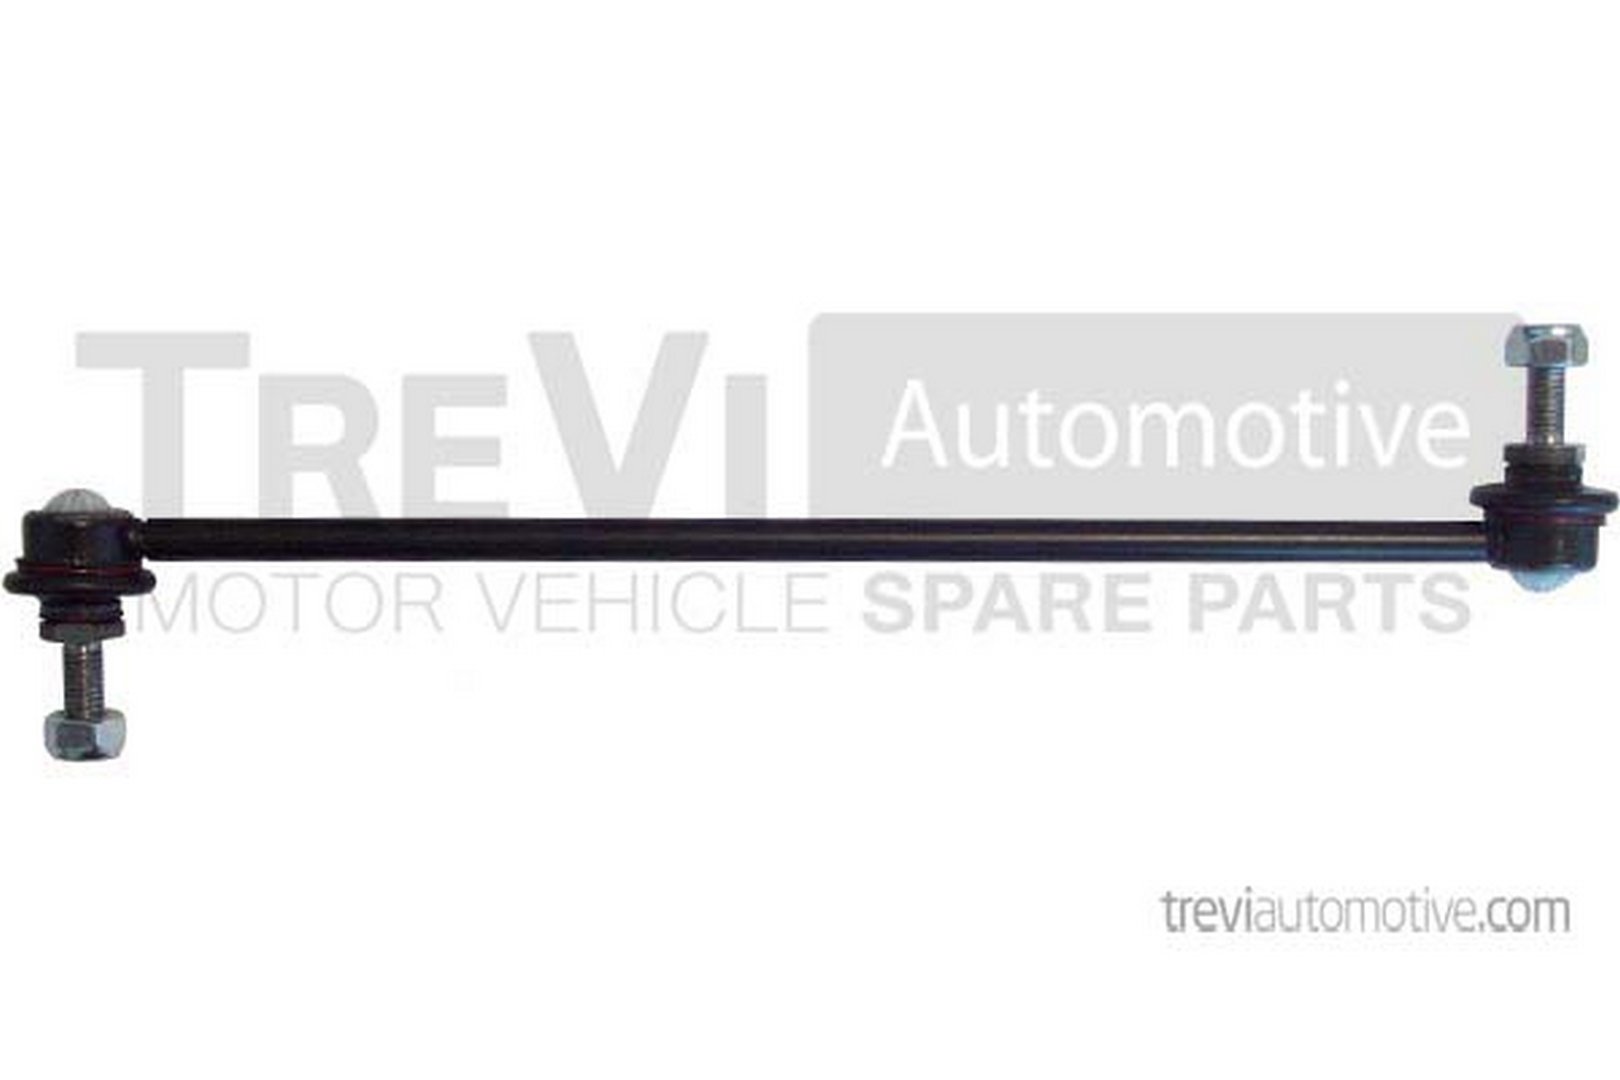 TREVI AUTOMOTIVE TRTT4400